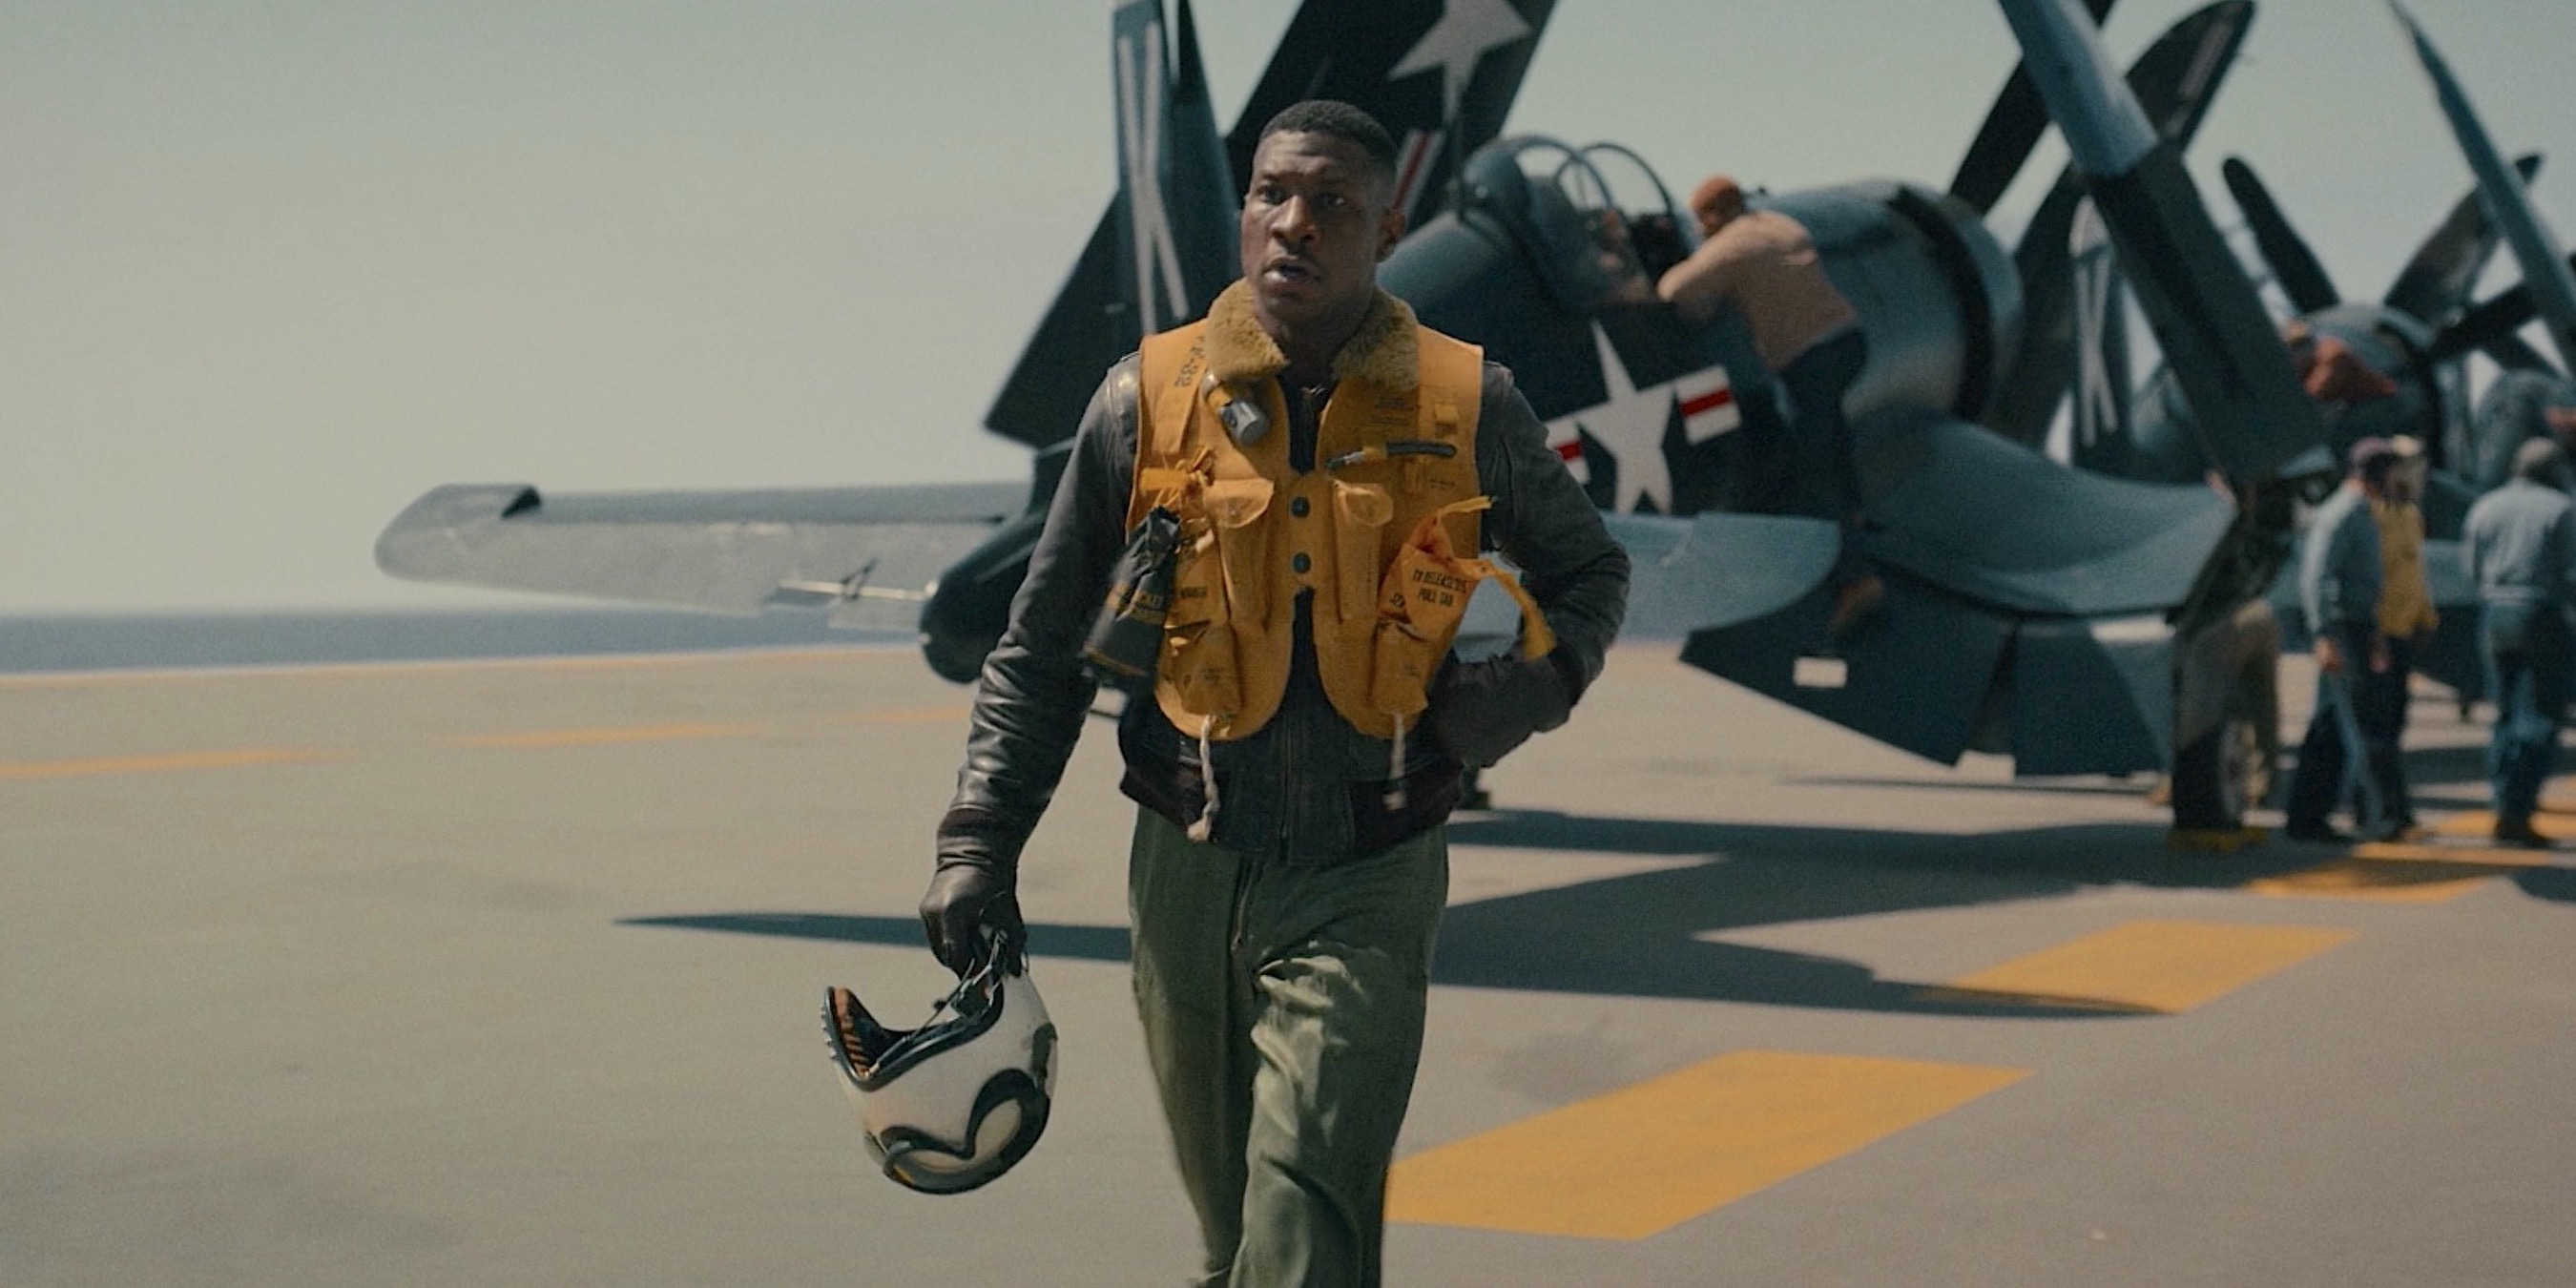 Devotion: Jonathan Majors' Flight Suit as Jesse Brown » BAMF Style